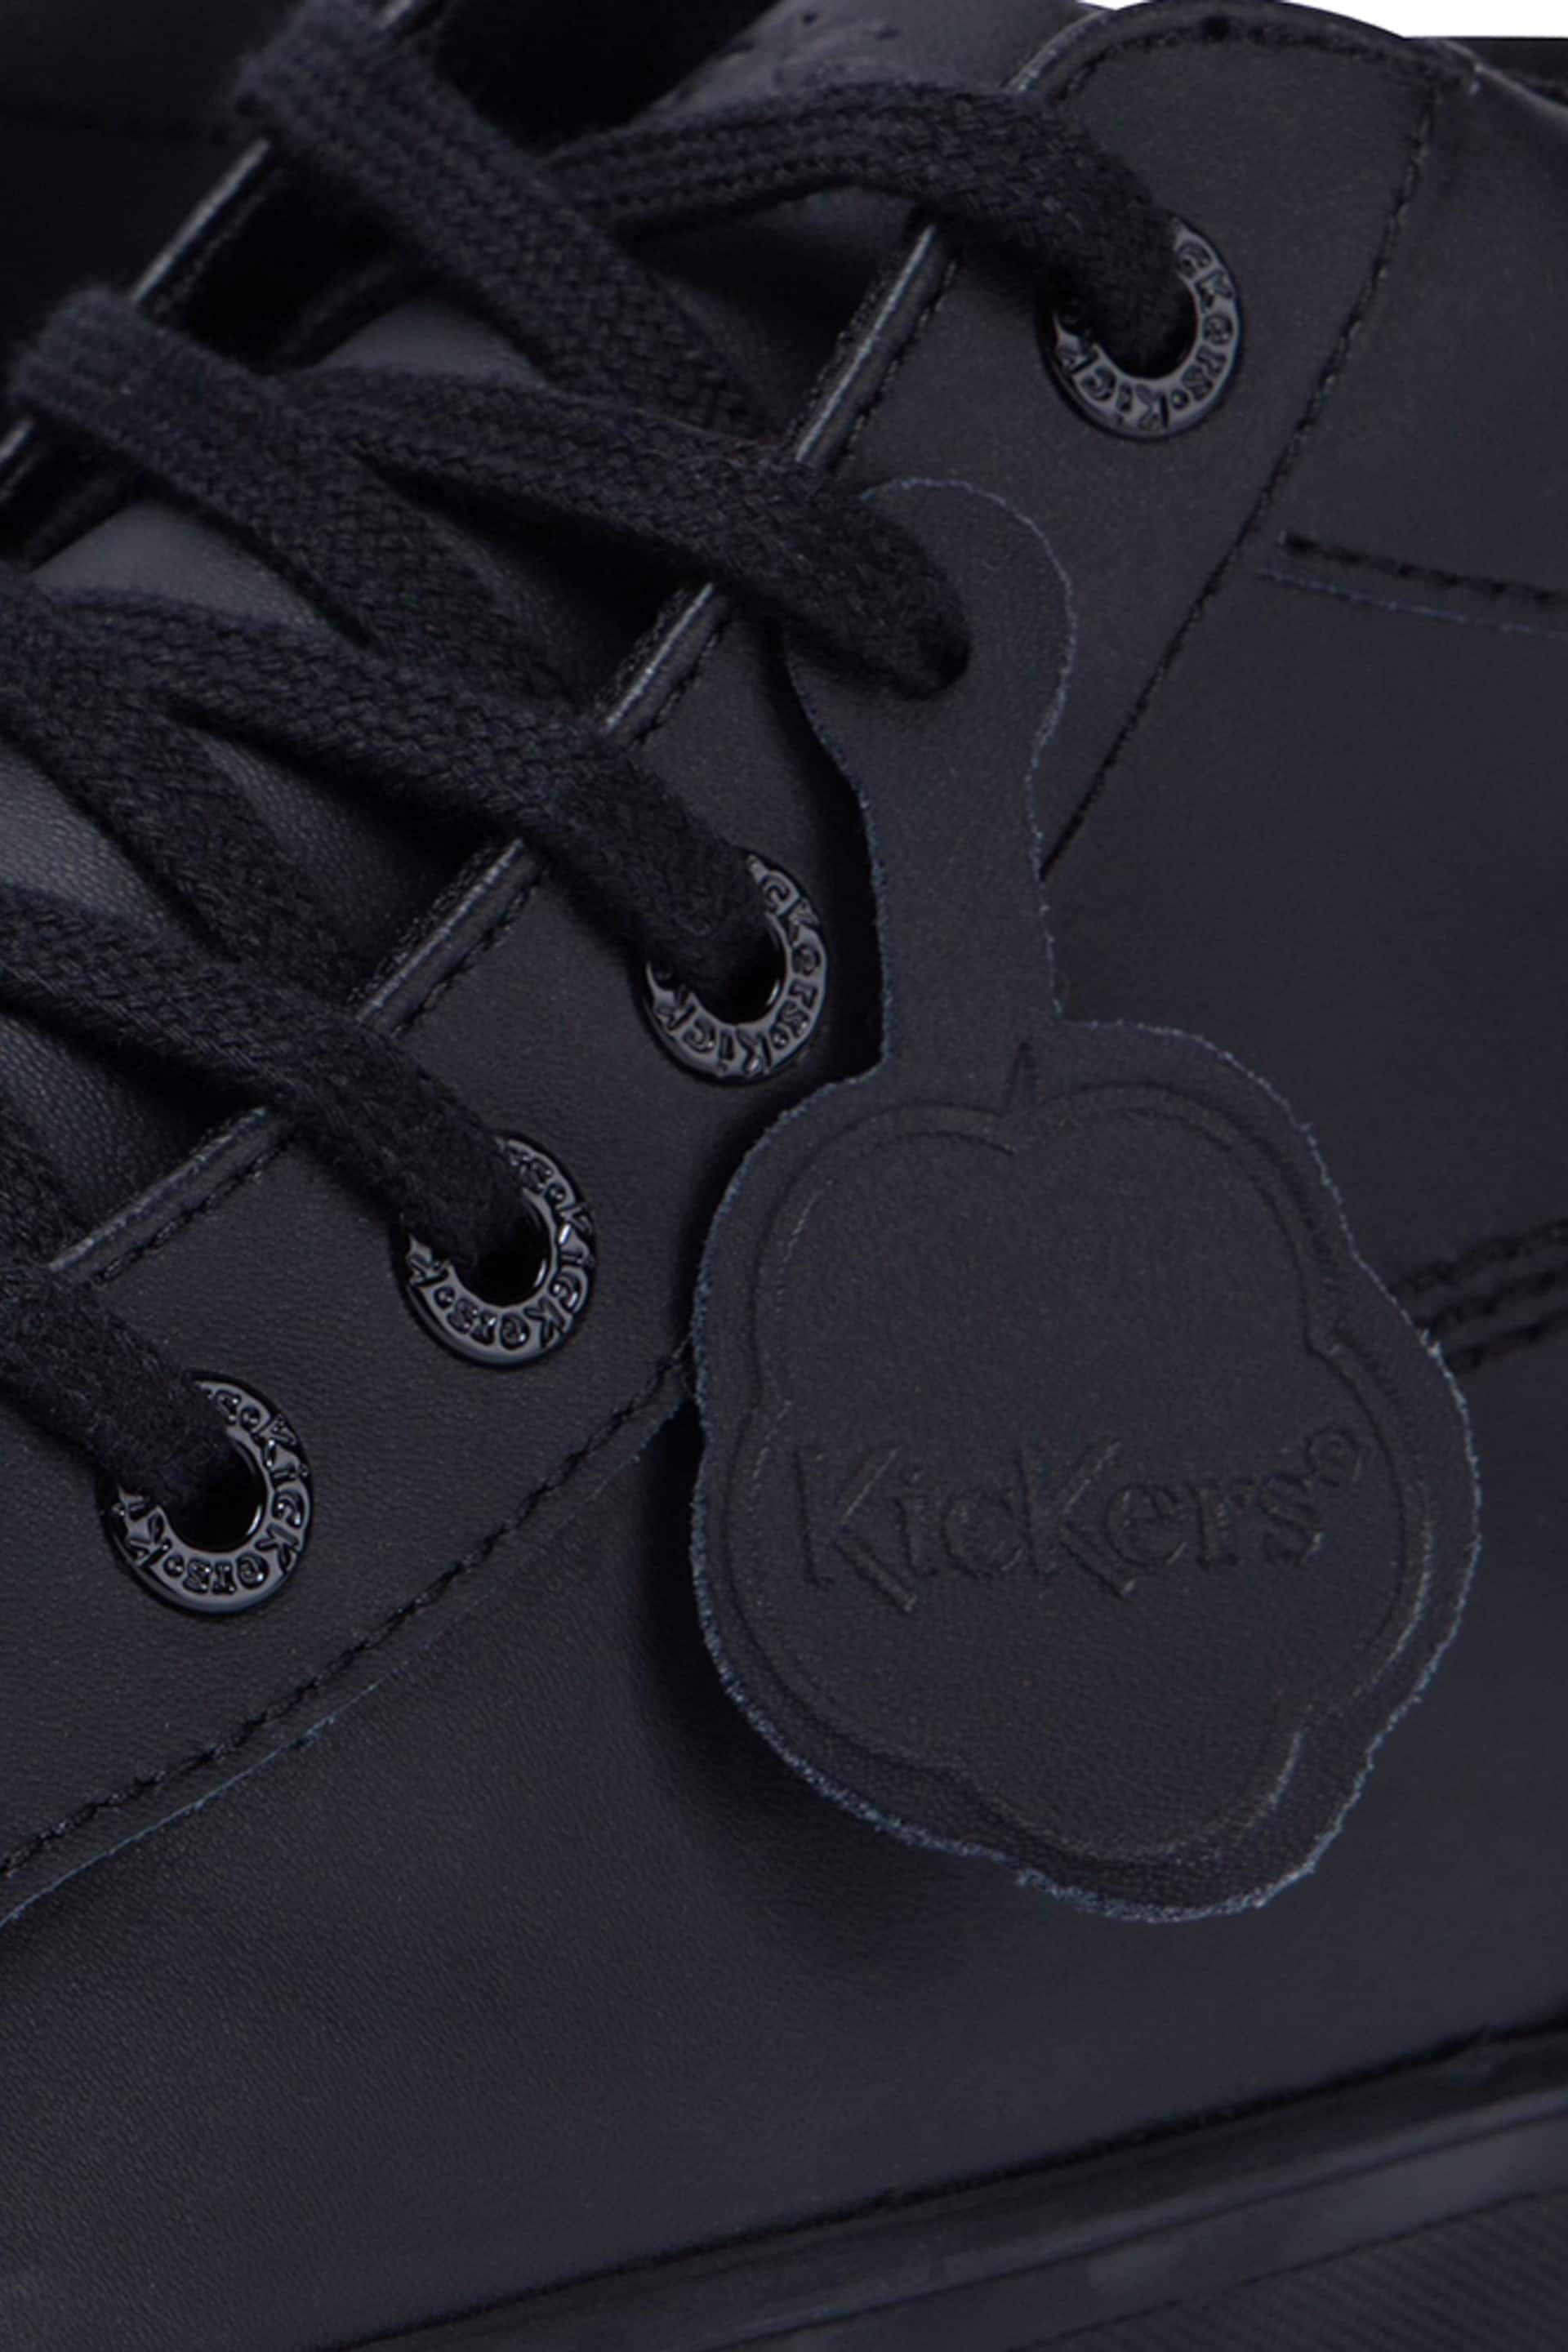 Kickers Black Tovni Hi Leather Shoes - Image 5 of 6